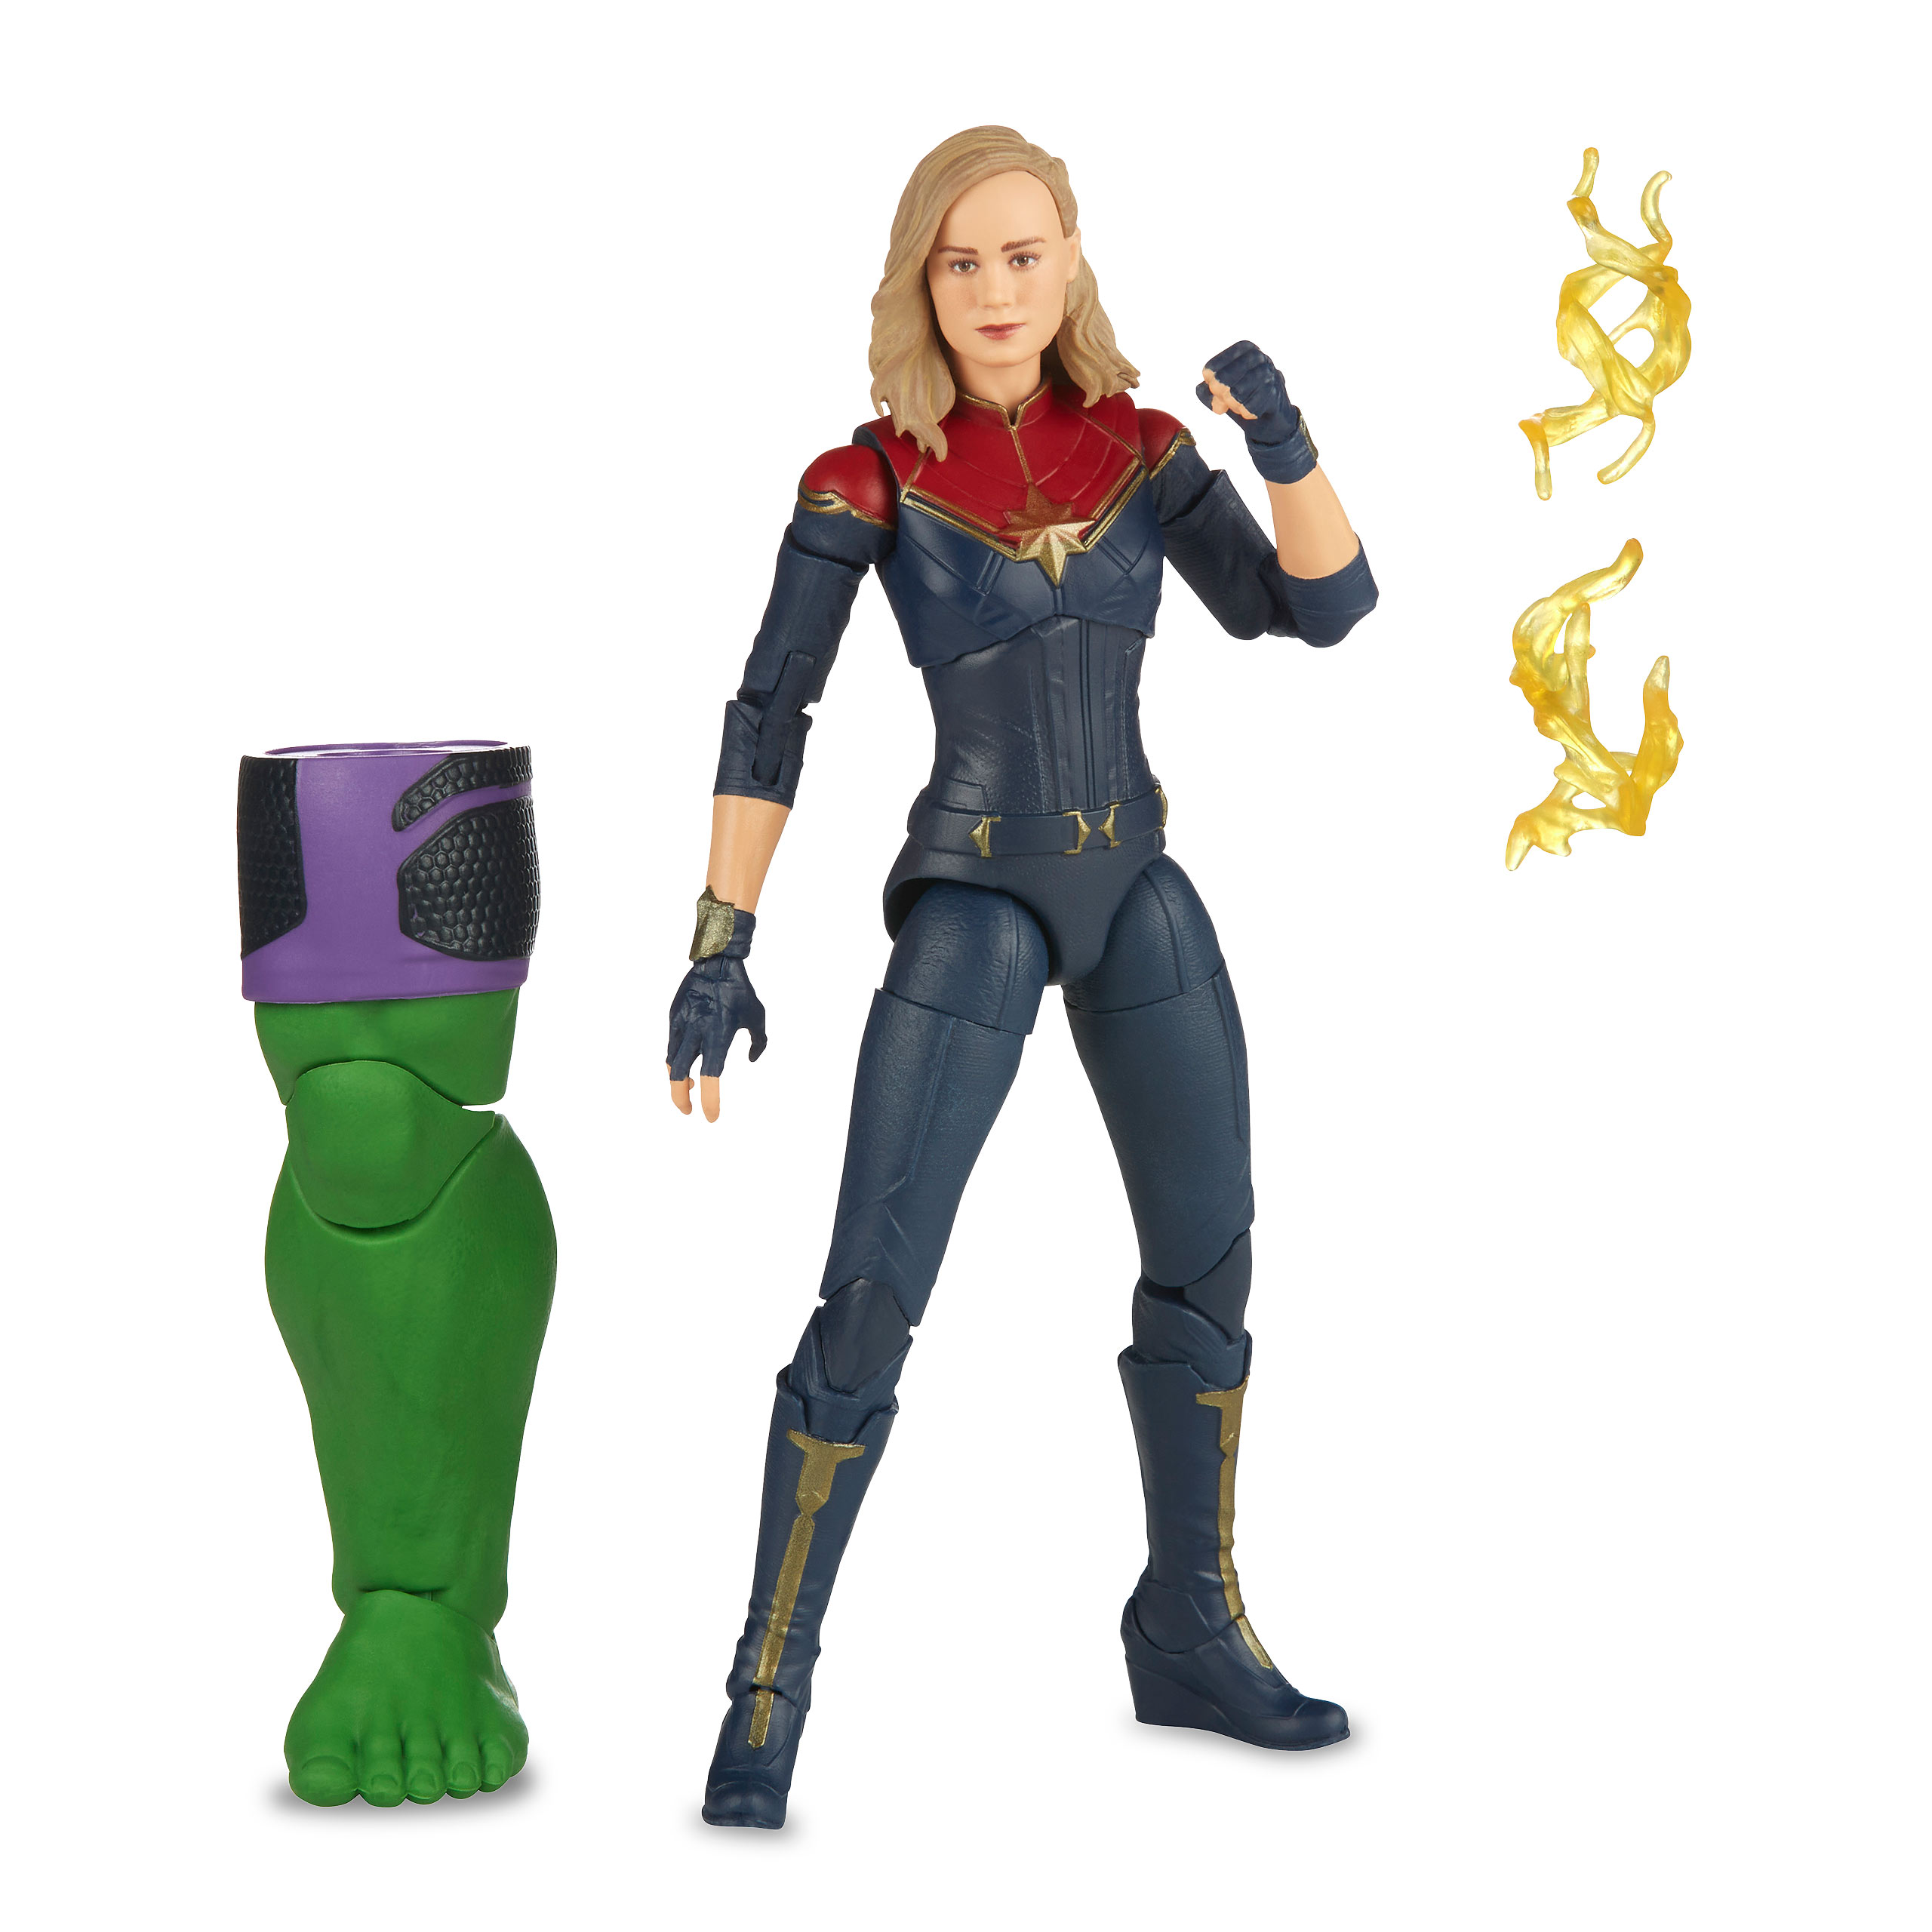 The Marvels - Figurine d'action Captain Marvel